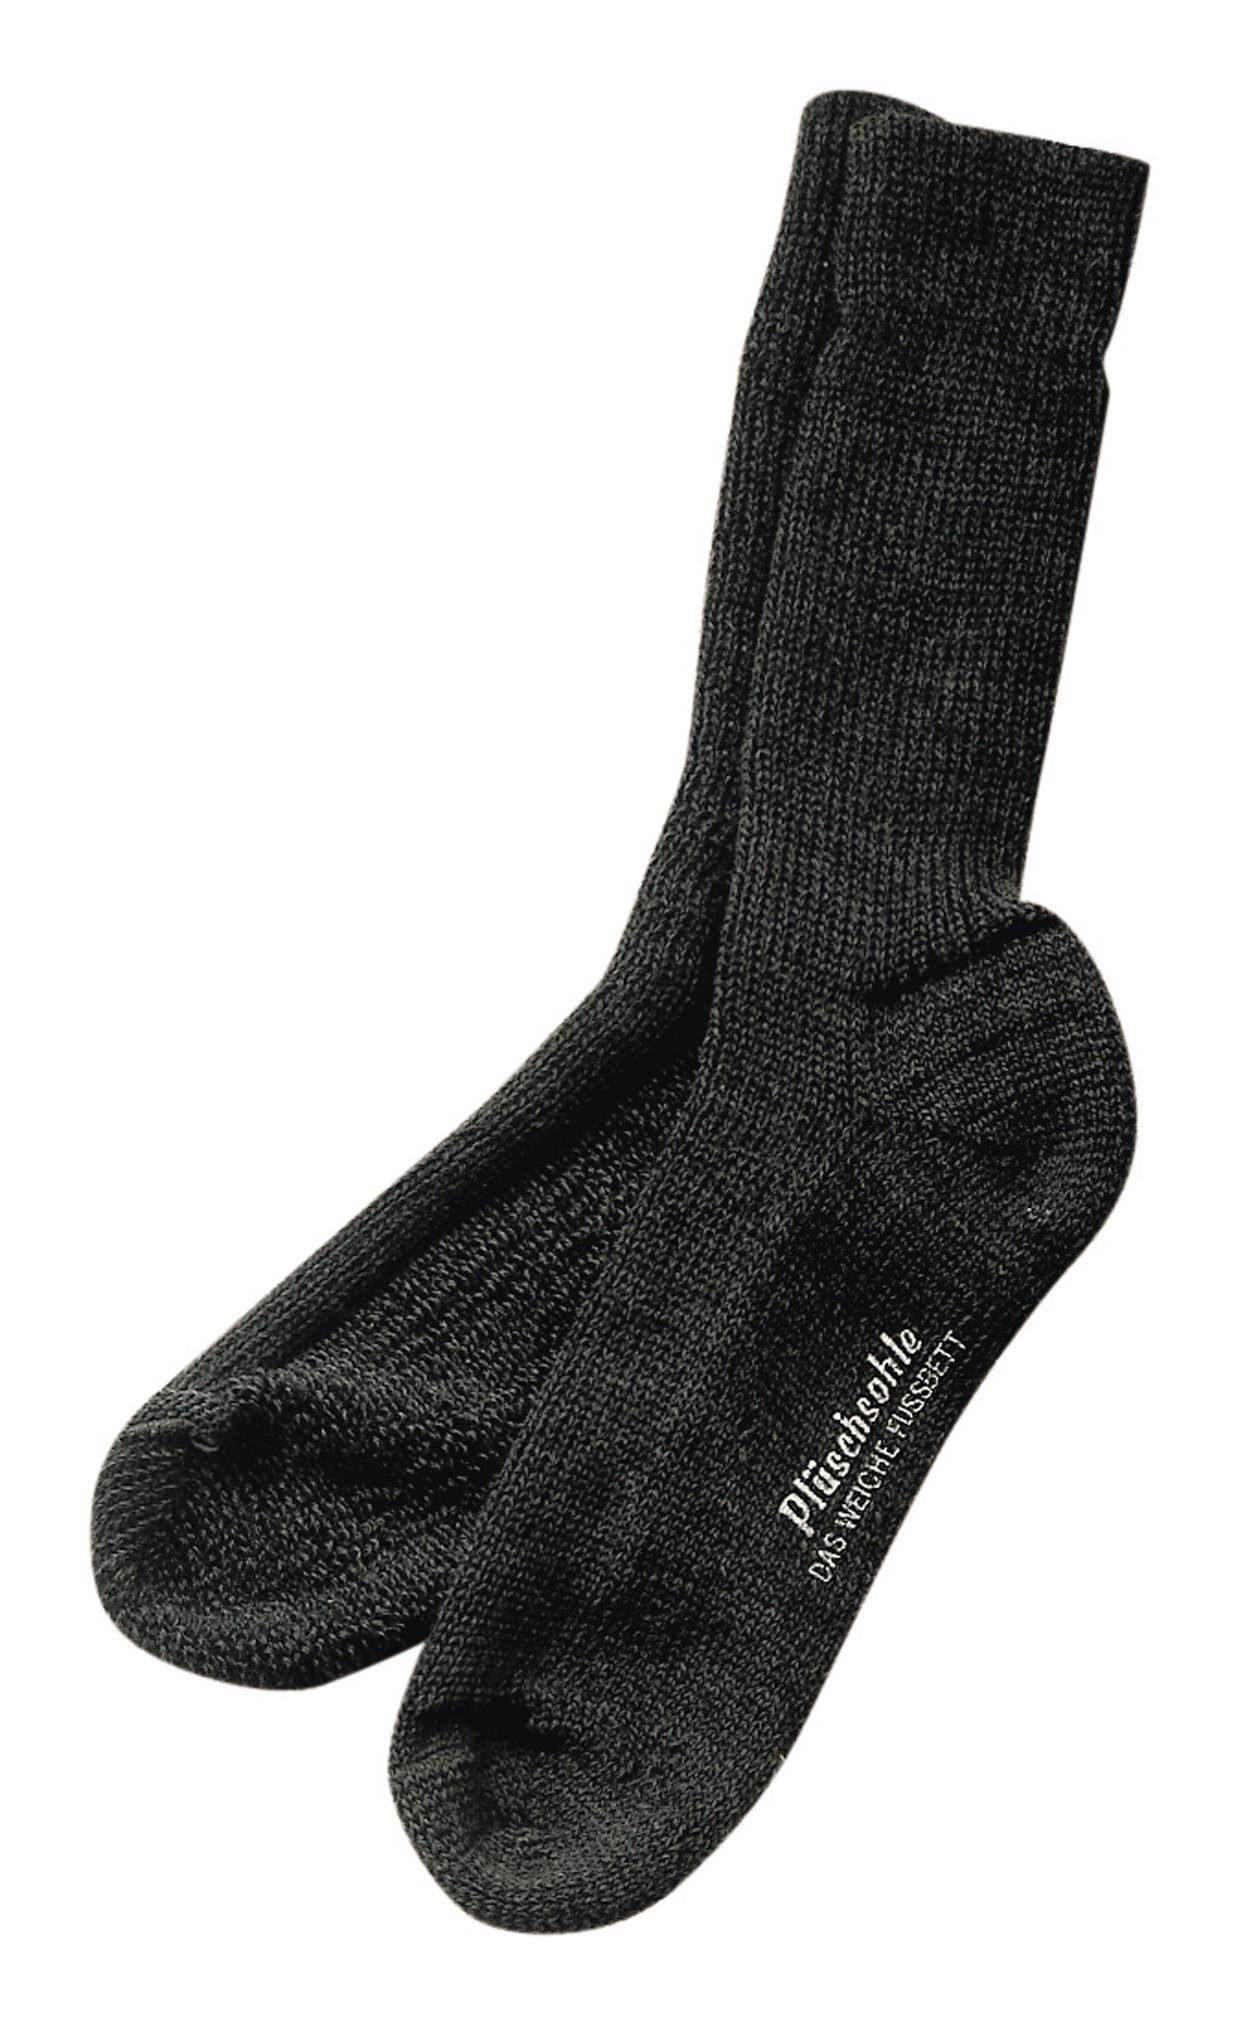 fortis Socken Gesundheitssocke Größe 43 - 44 anthrazit | Socken